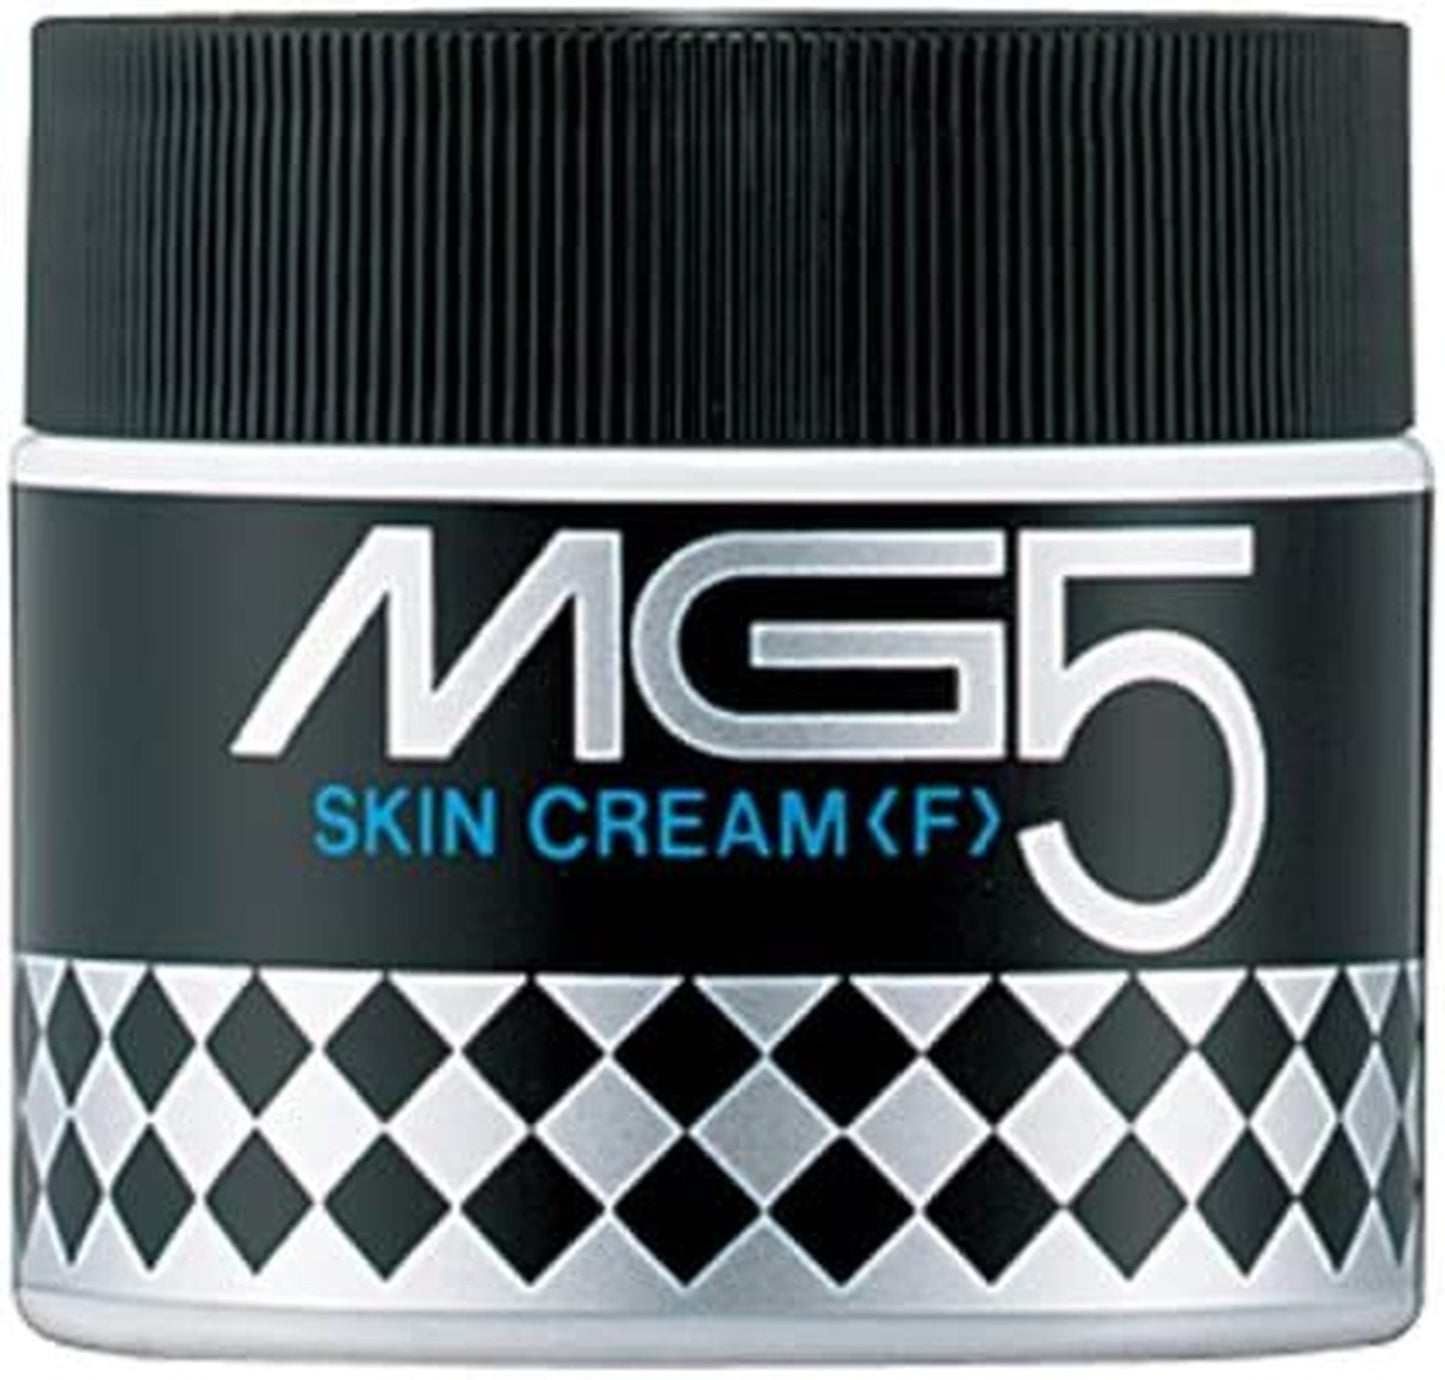 Set of 3 Shiseido MG5 Skin Cream (F) 50g x 3 JAN:4901872333752